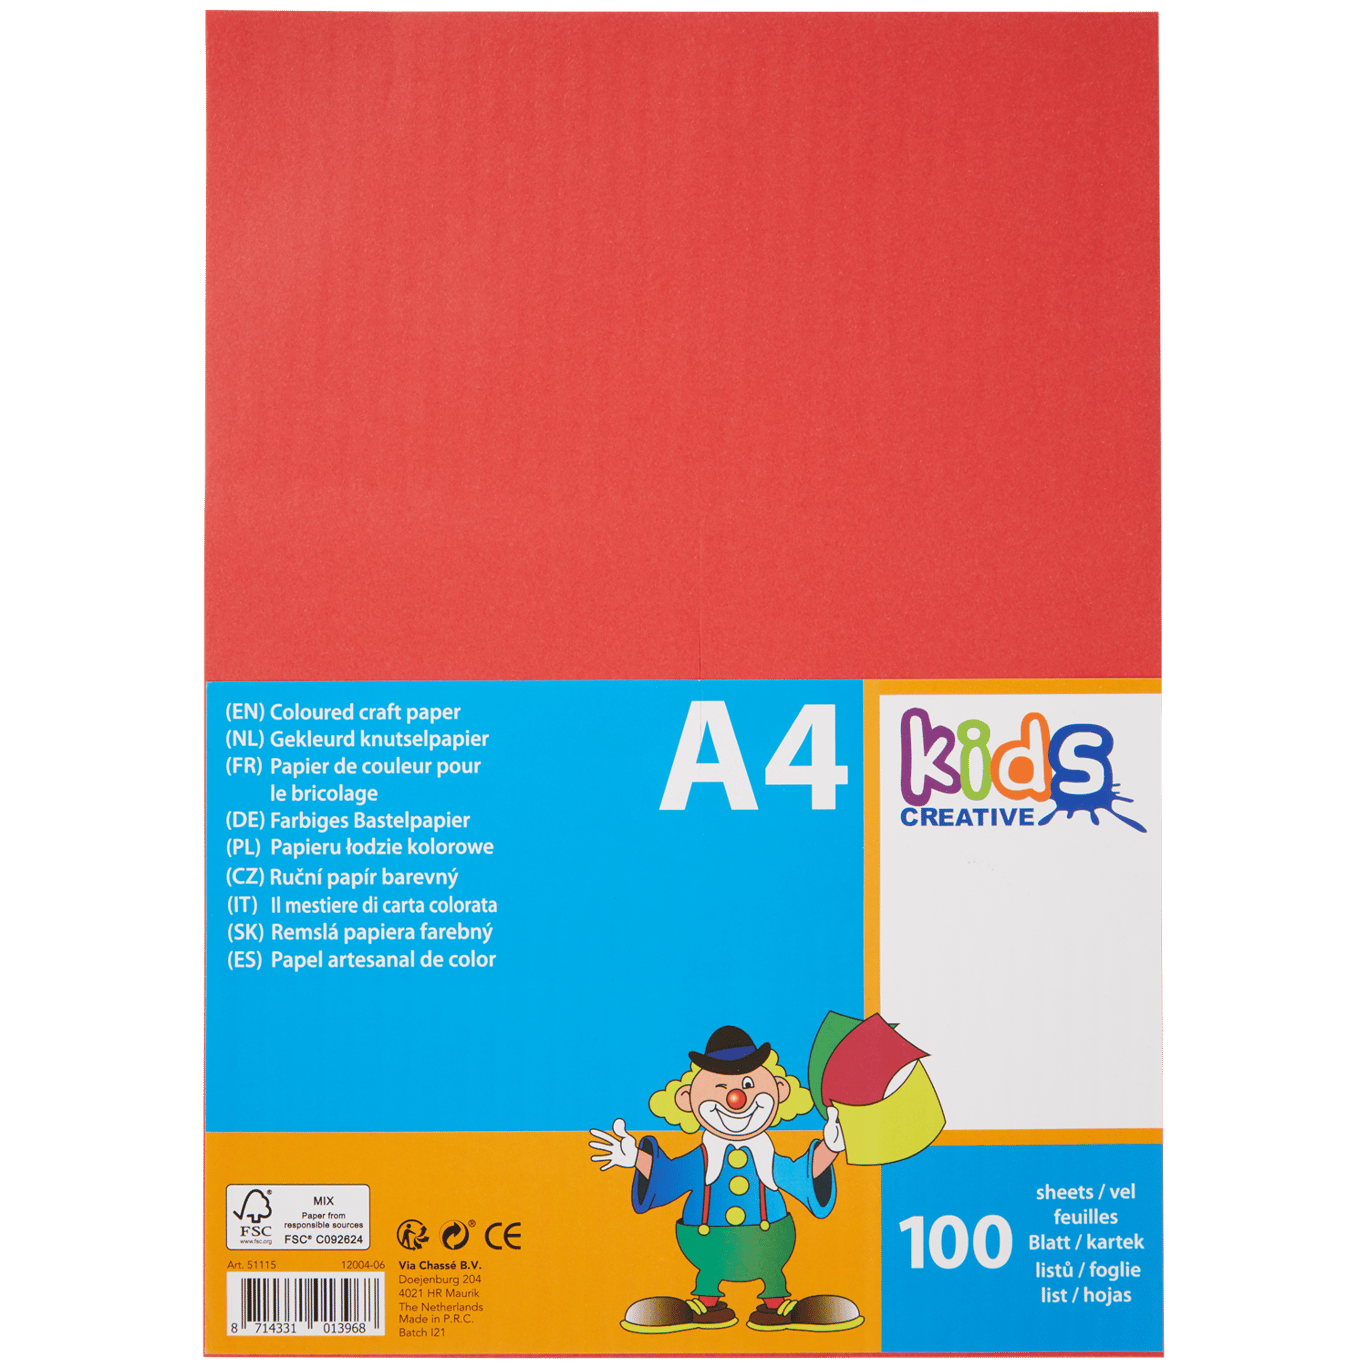 verlegen browser Agnes Gray Kids Creative gekleurd knutselpapier | Action.com